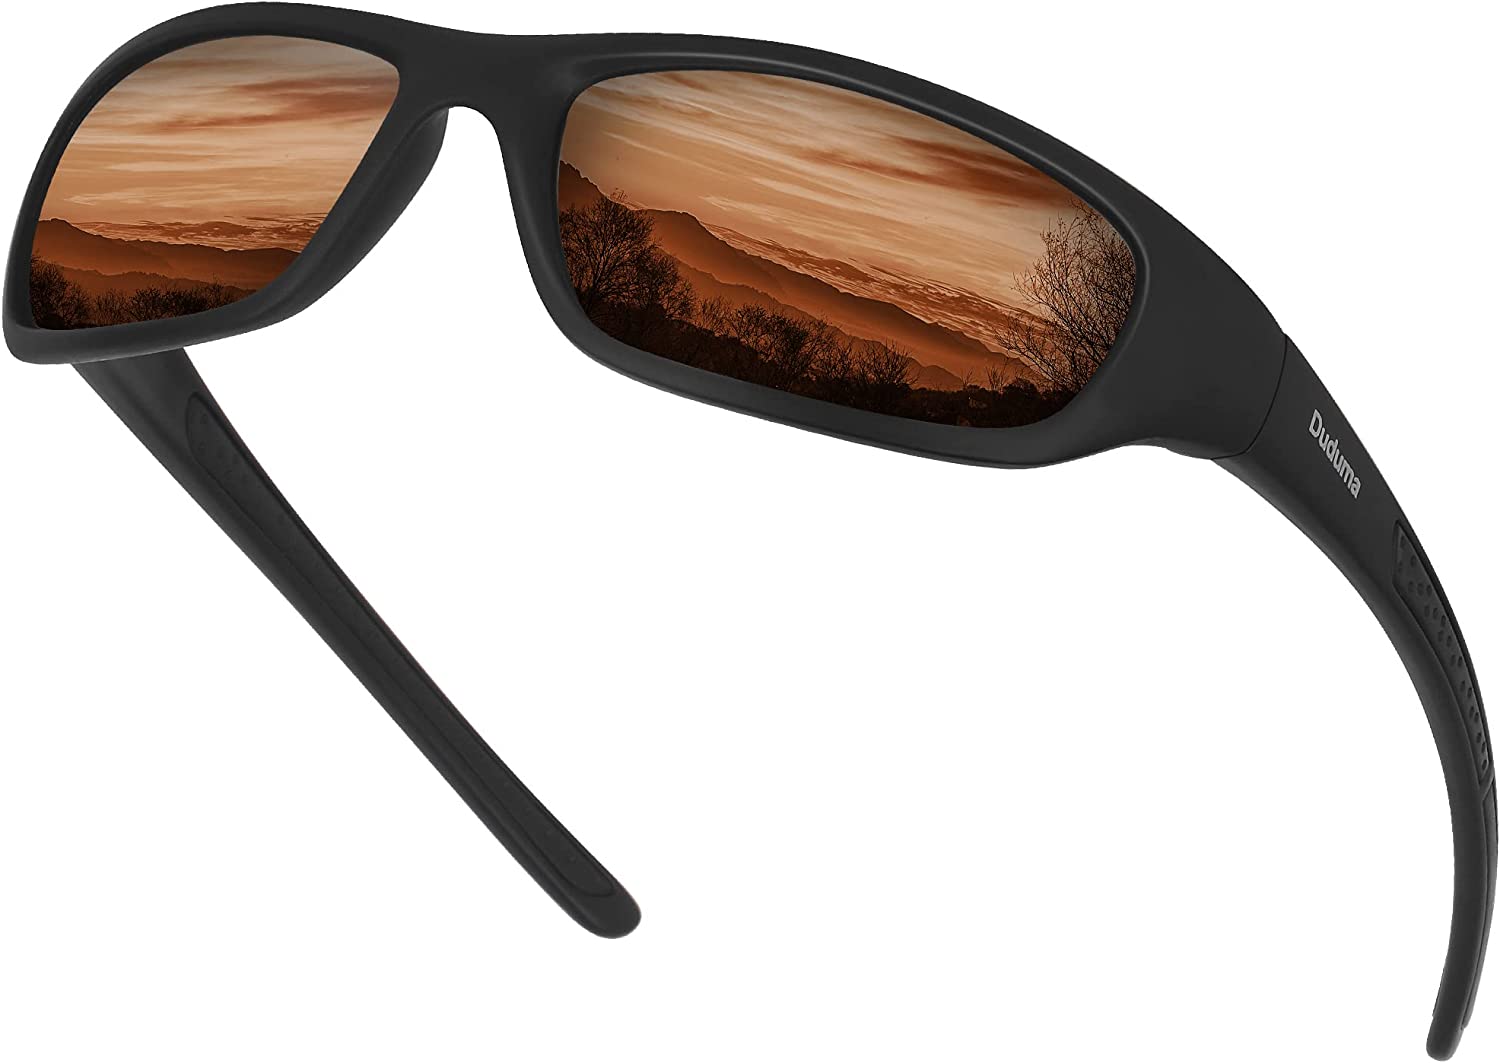 Duduma Sports Polarized Sunglasses for Men Women Baseball Cycling Golf  Fishing S